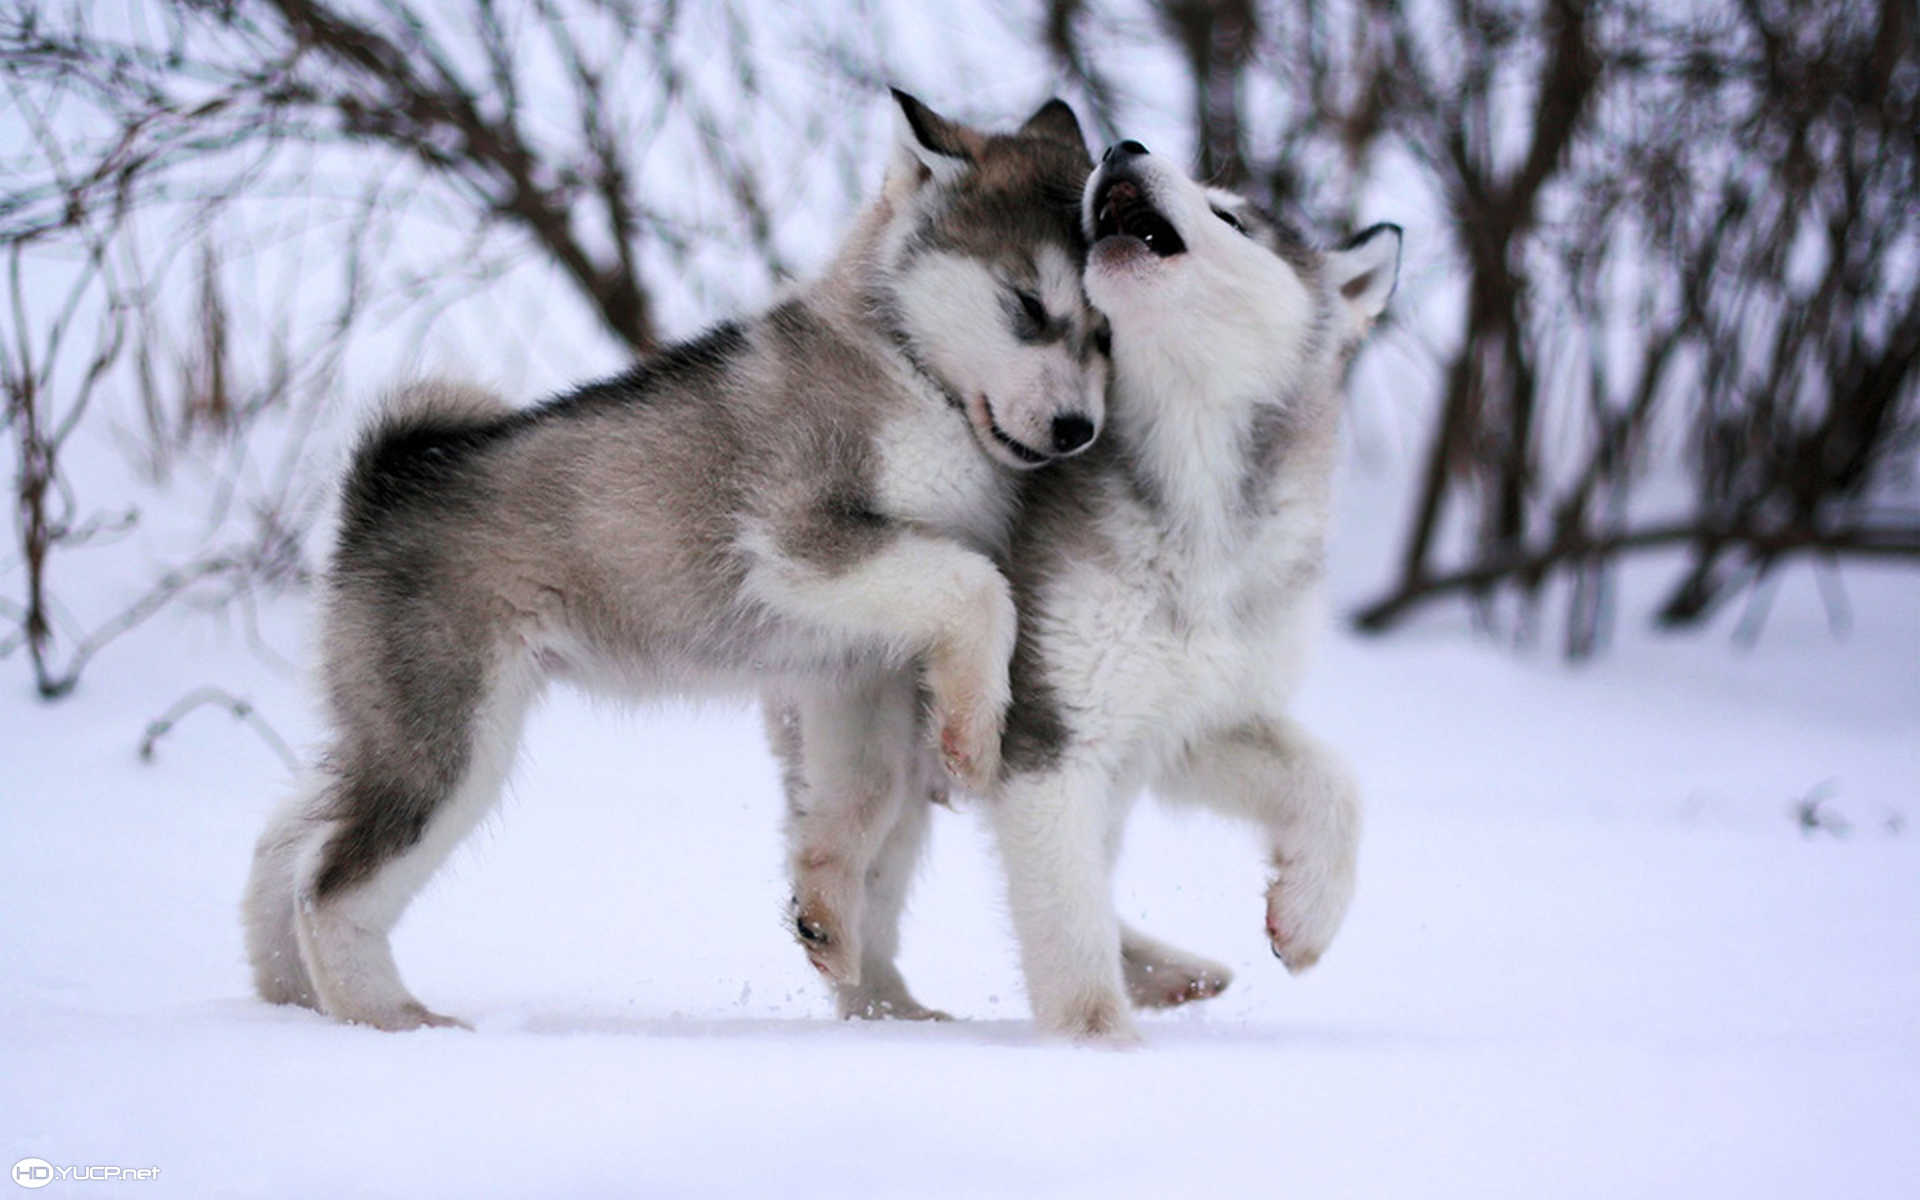 Alaskan Malamute puppies play